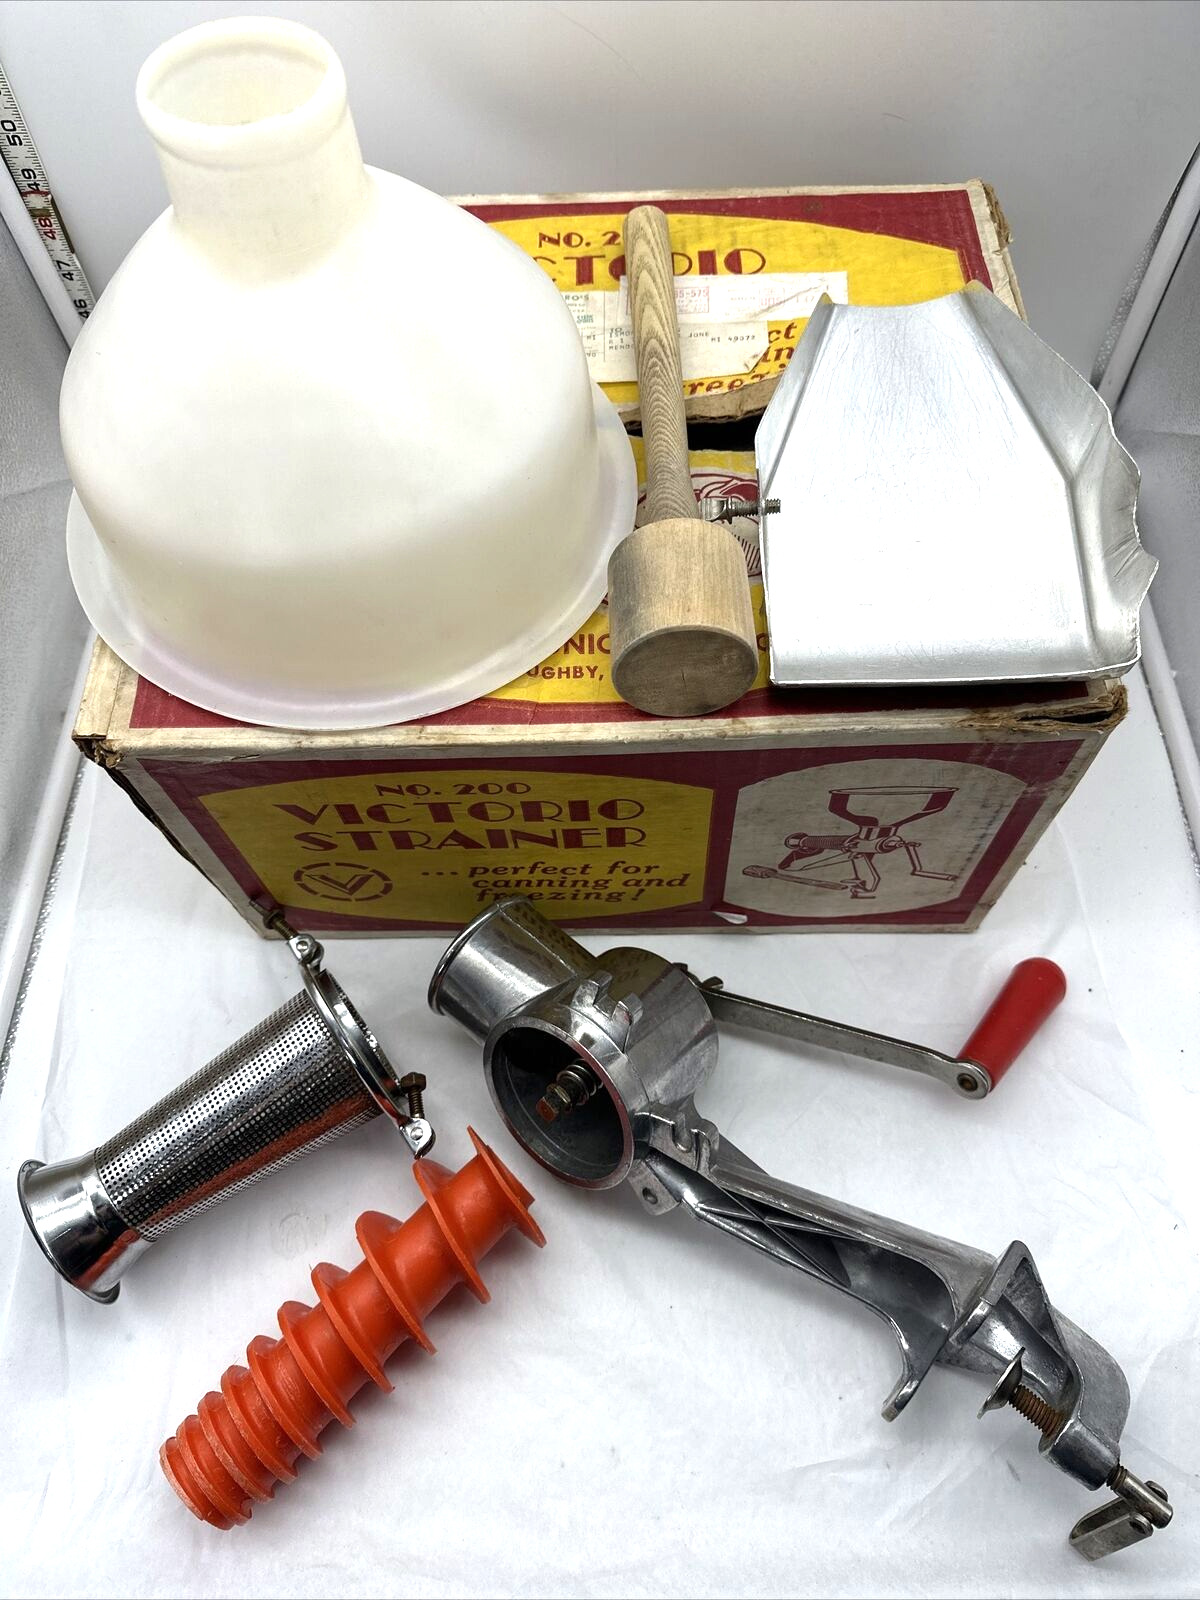 Vintage Vitantonio Victorio #200 Hand Crank Food Strainer Juicer w/ Box USA MADE